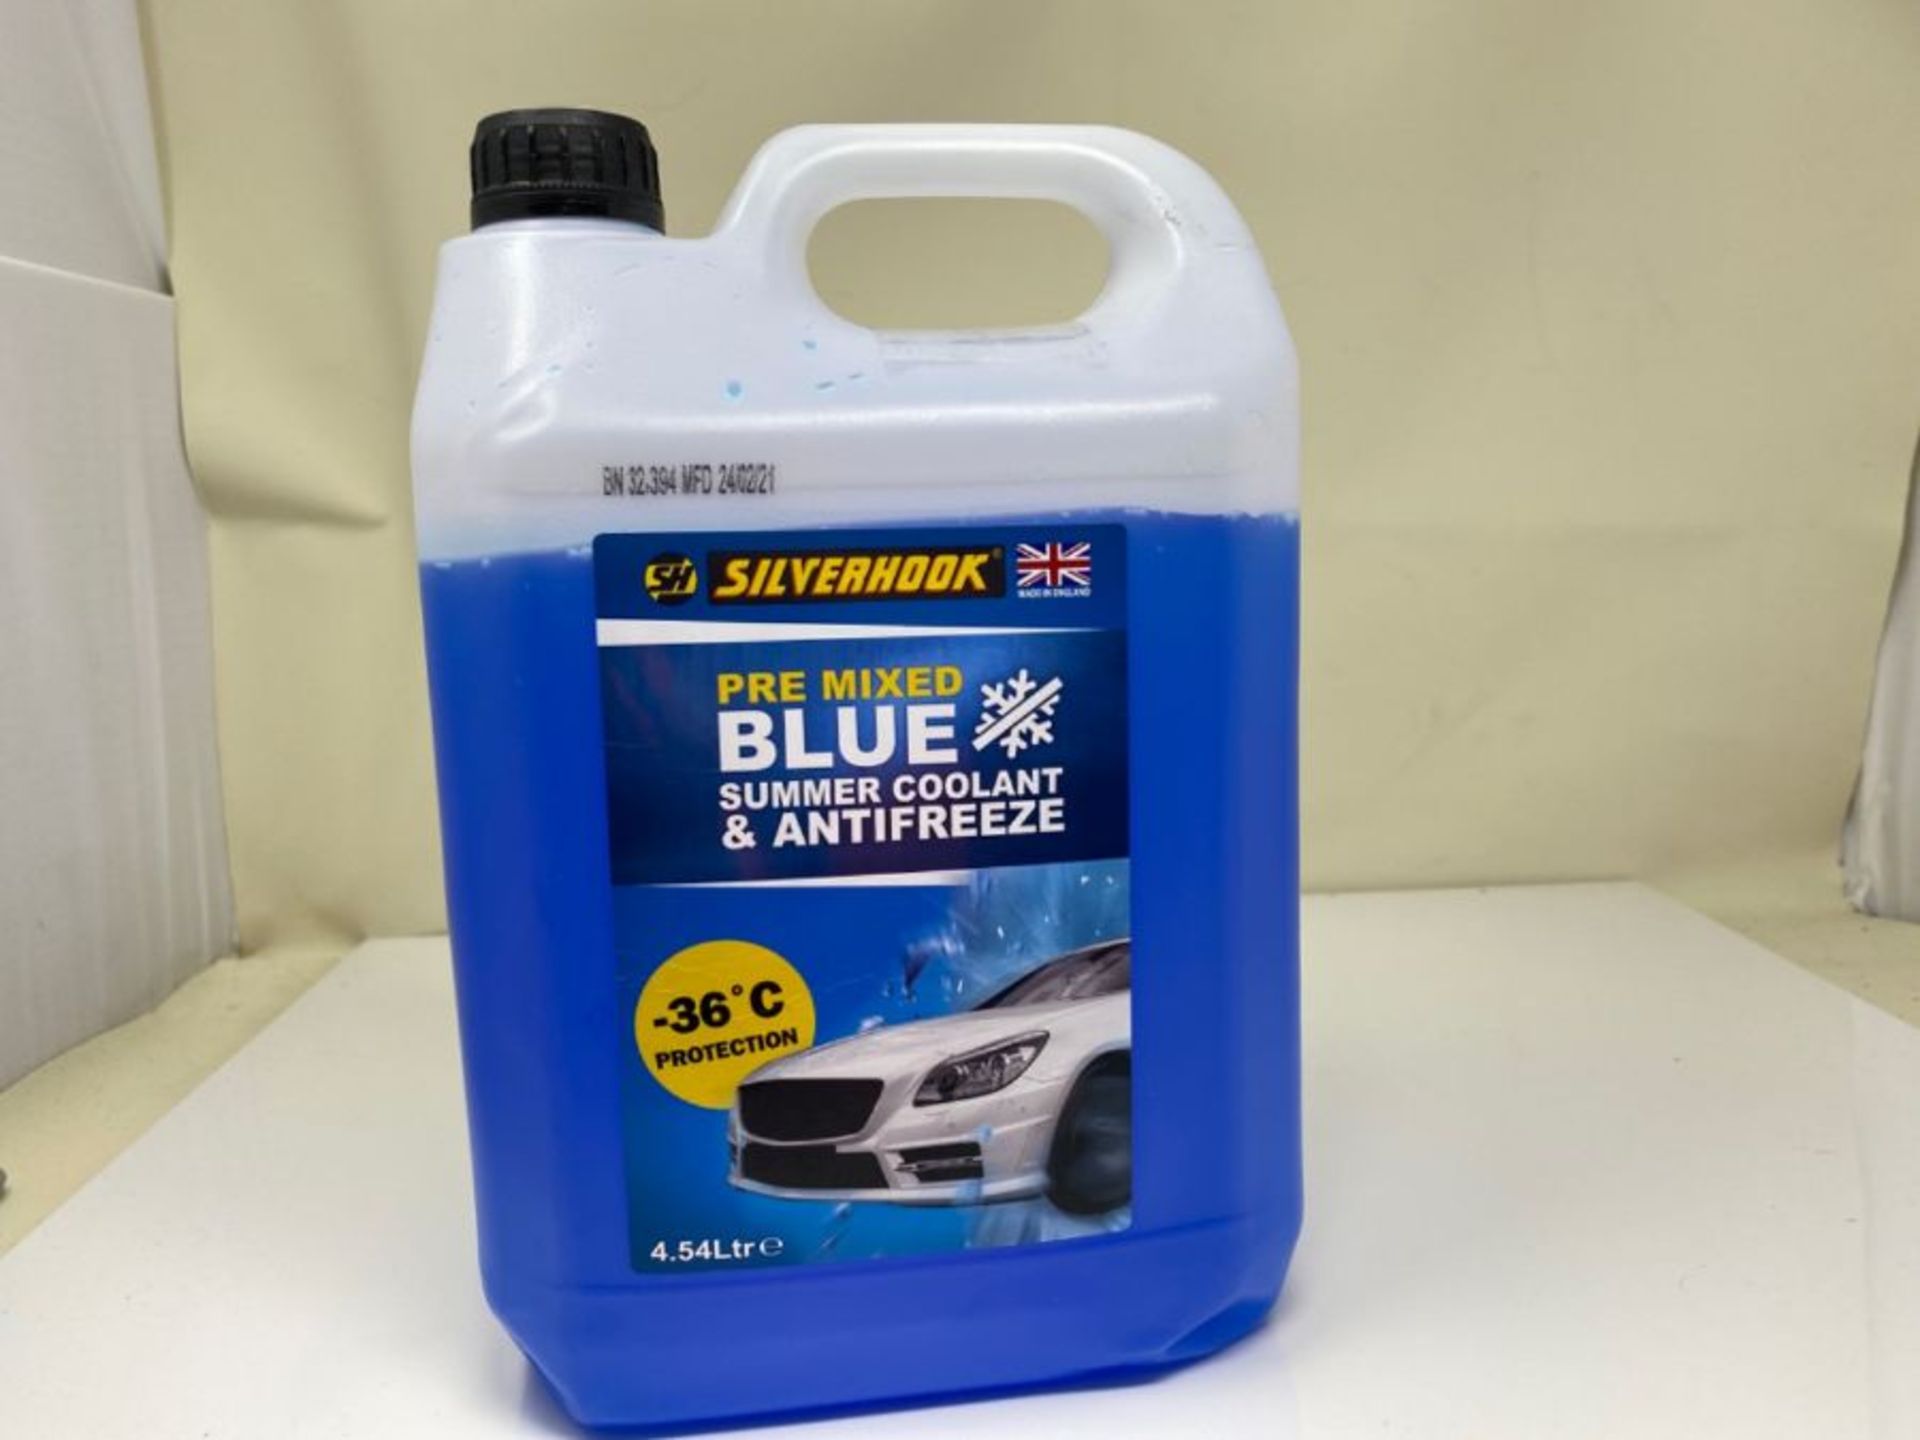 Silverhook SHB4 Ready Mixed Blue Antifreeze, 4.54 Liter - Image 2 of 2